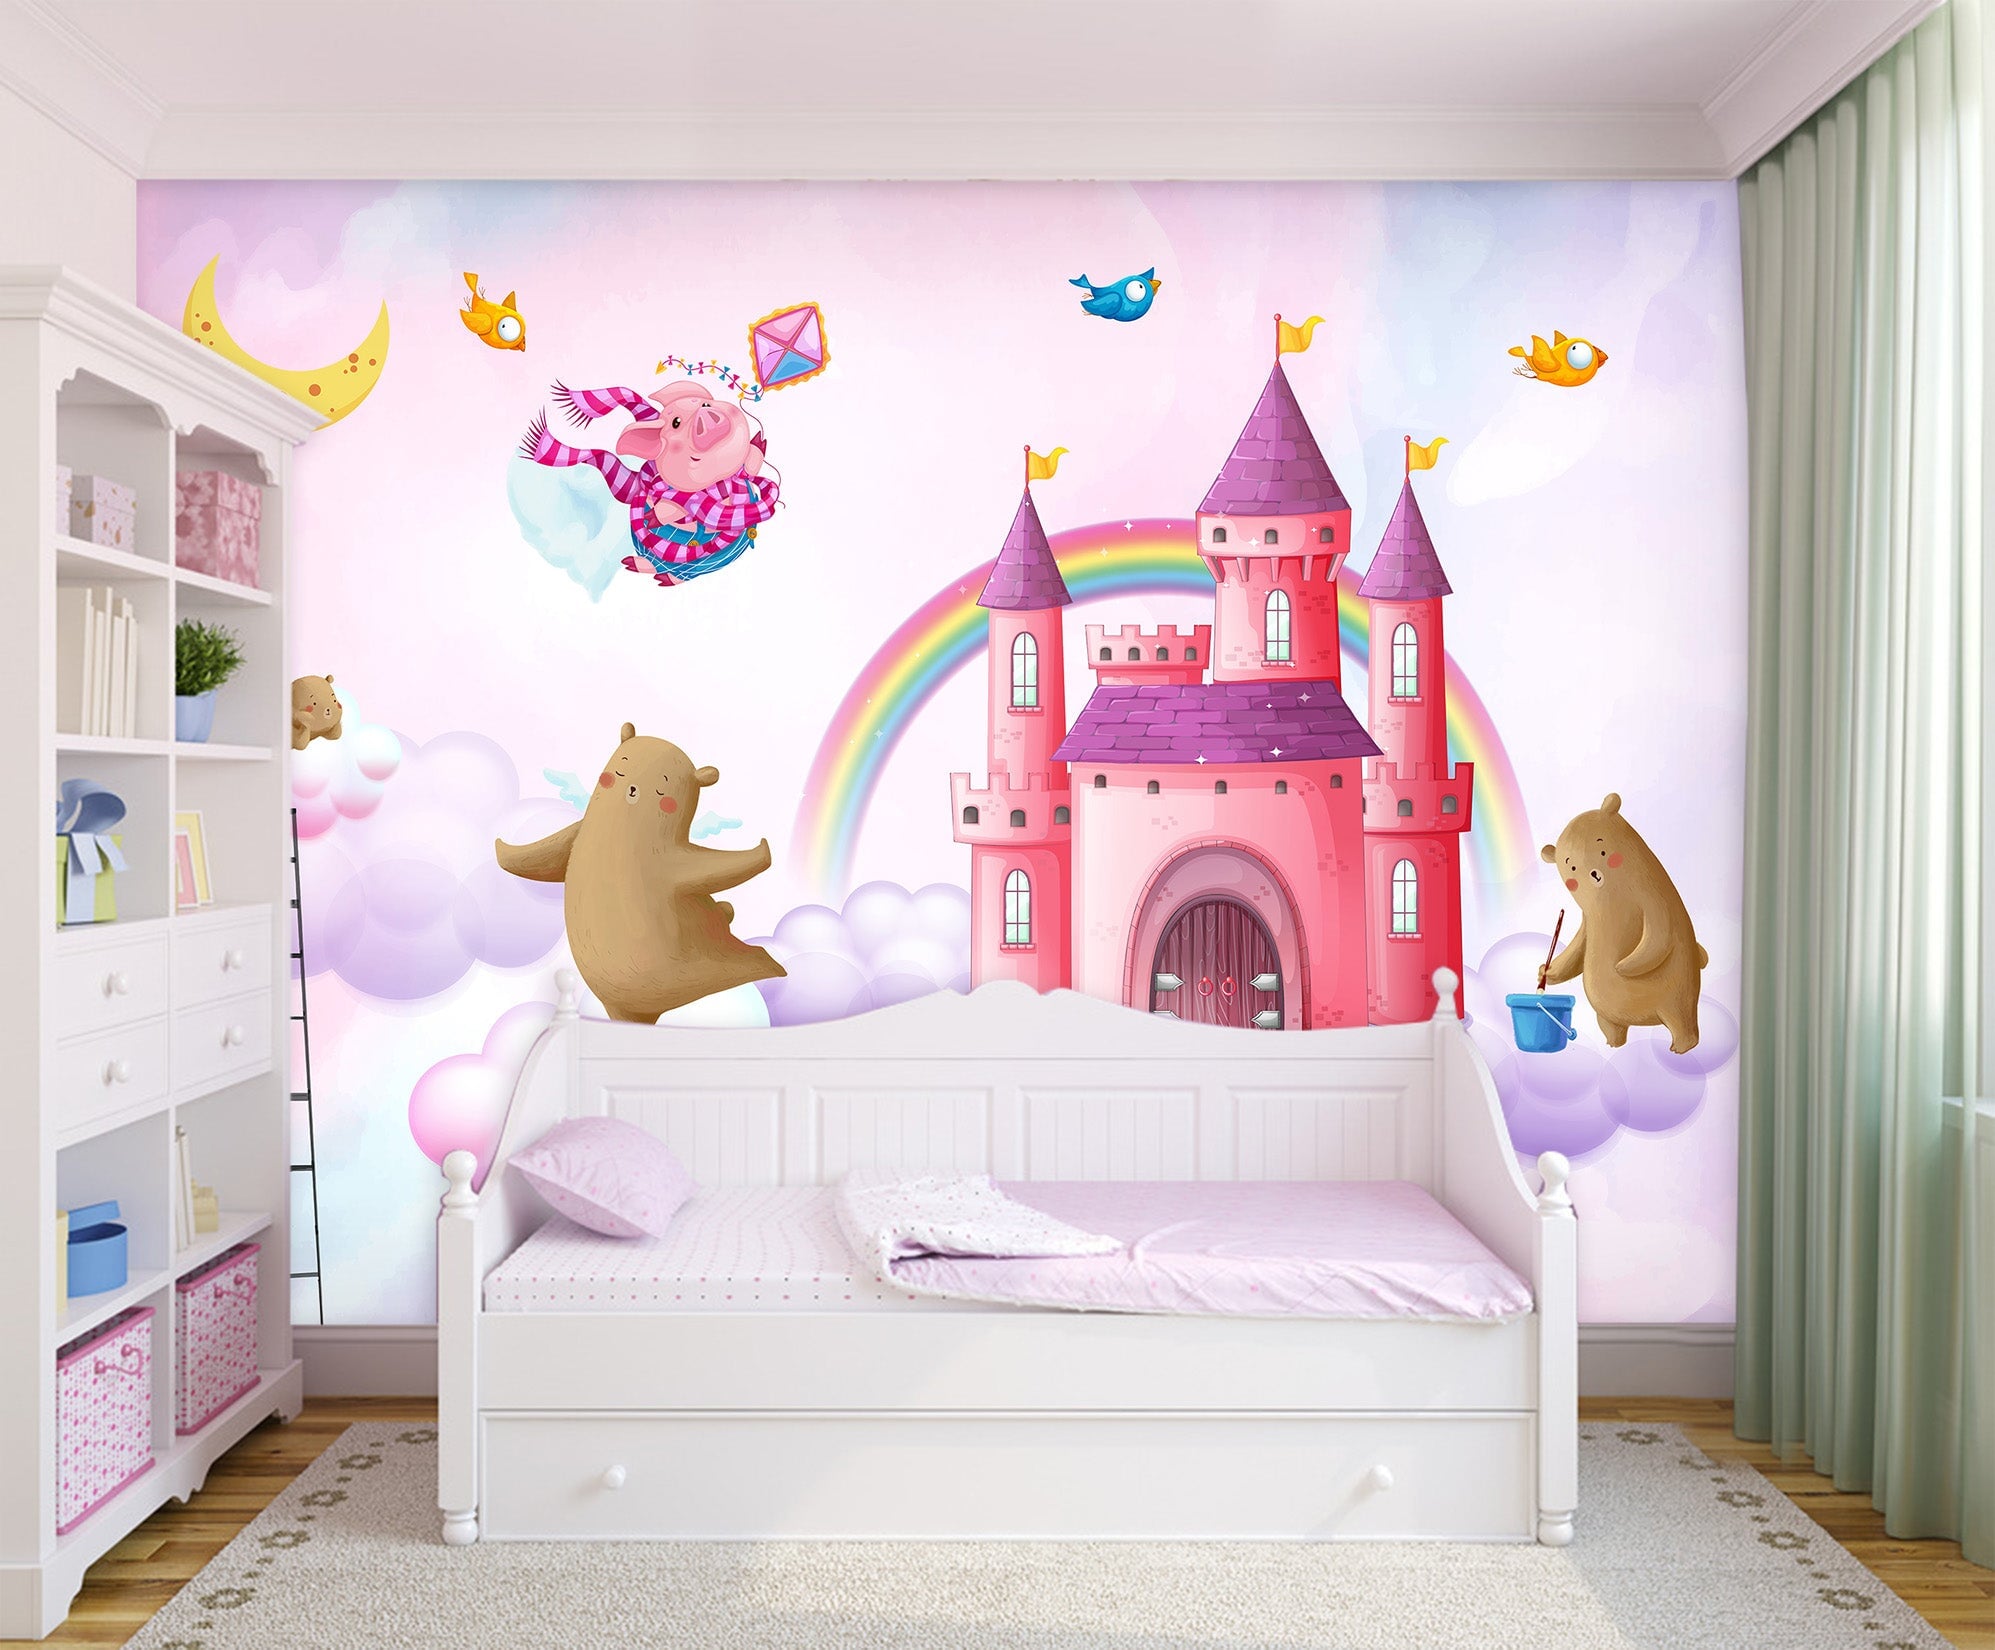 3D Castle Dog Bear Pig 010 Wall Murals Wallpaper AJ Wallpaper 2 